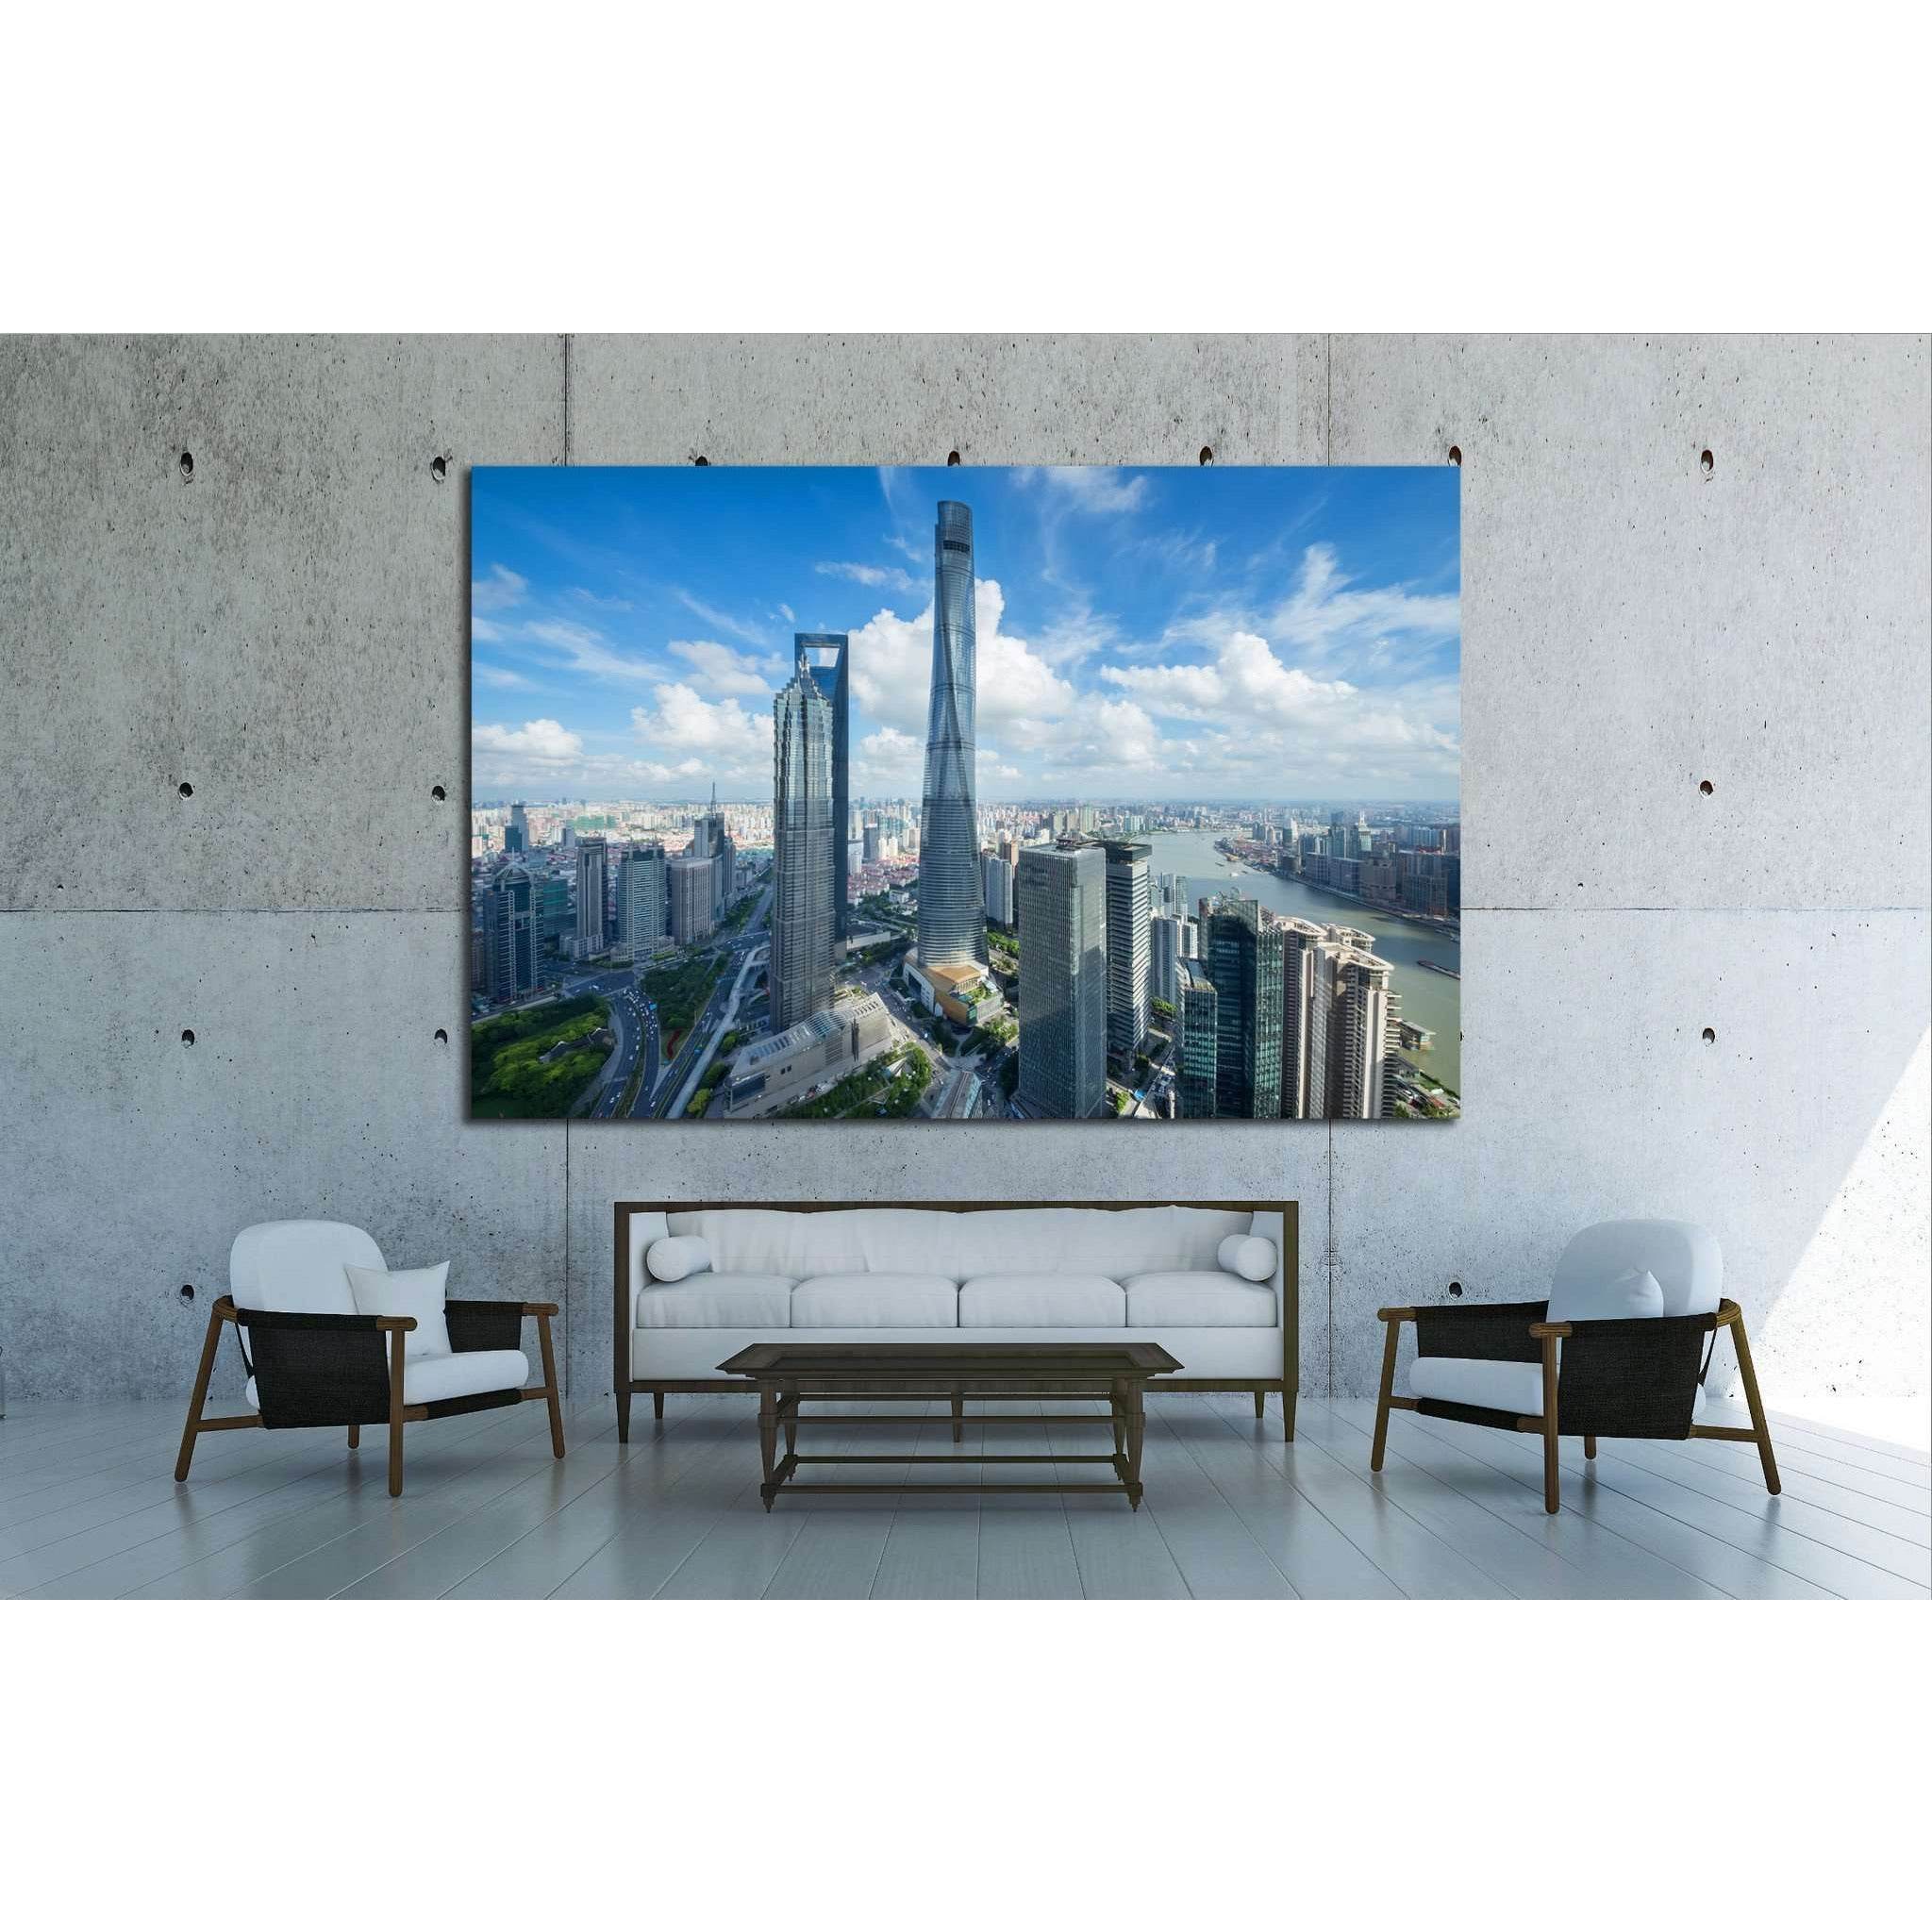 SHANGHAI, Jin Mao Tower, Shanghai tower №1549 Ready to Hang Canvas Print